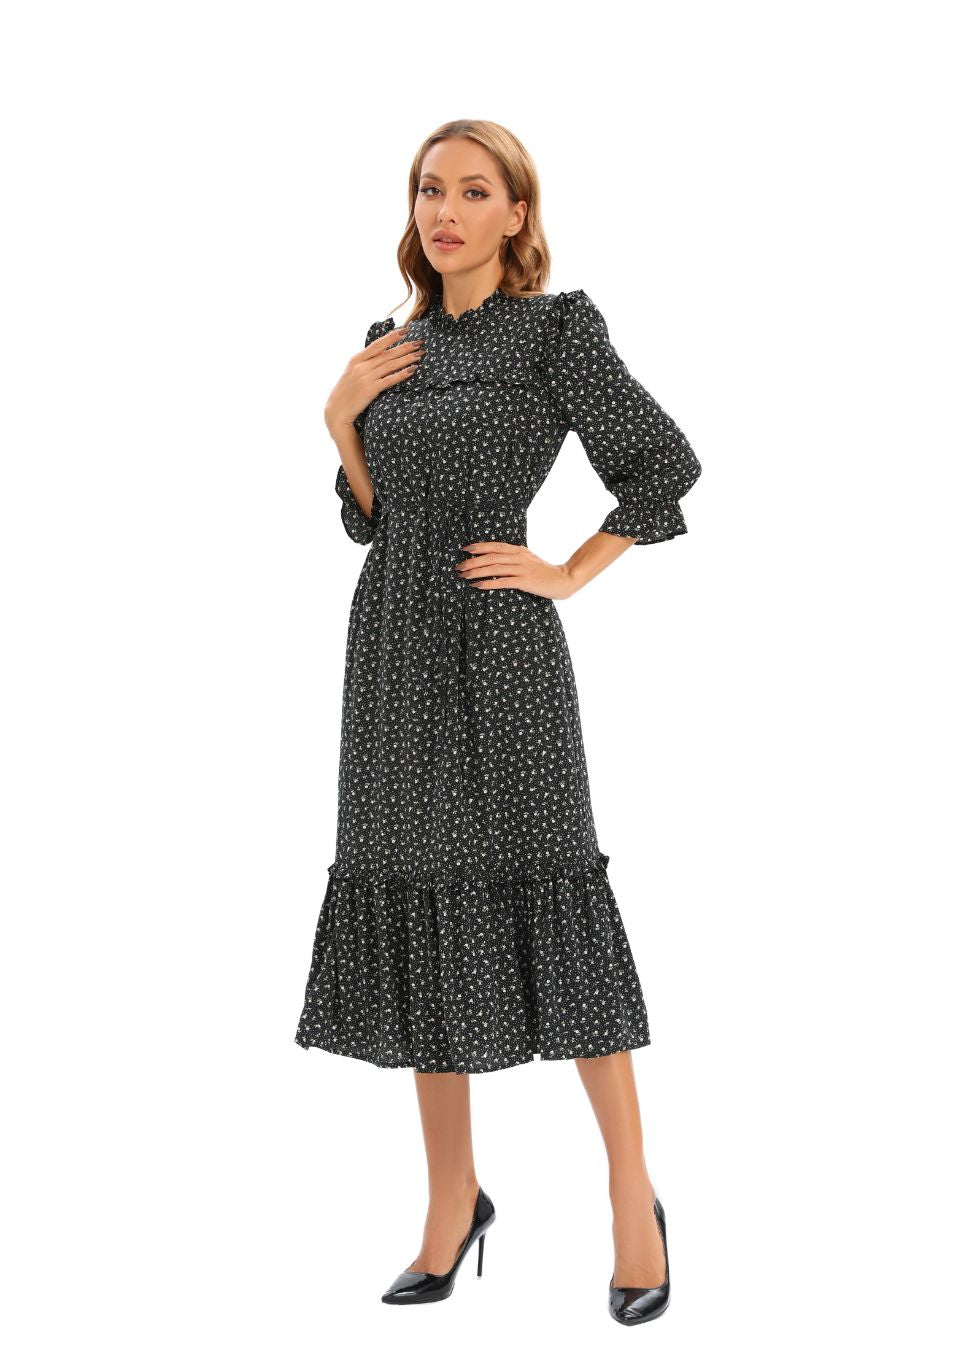 Midi Print Dress with 3/4 Sleeves - MissFinchNYC